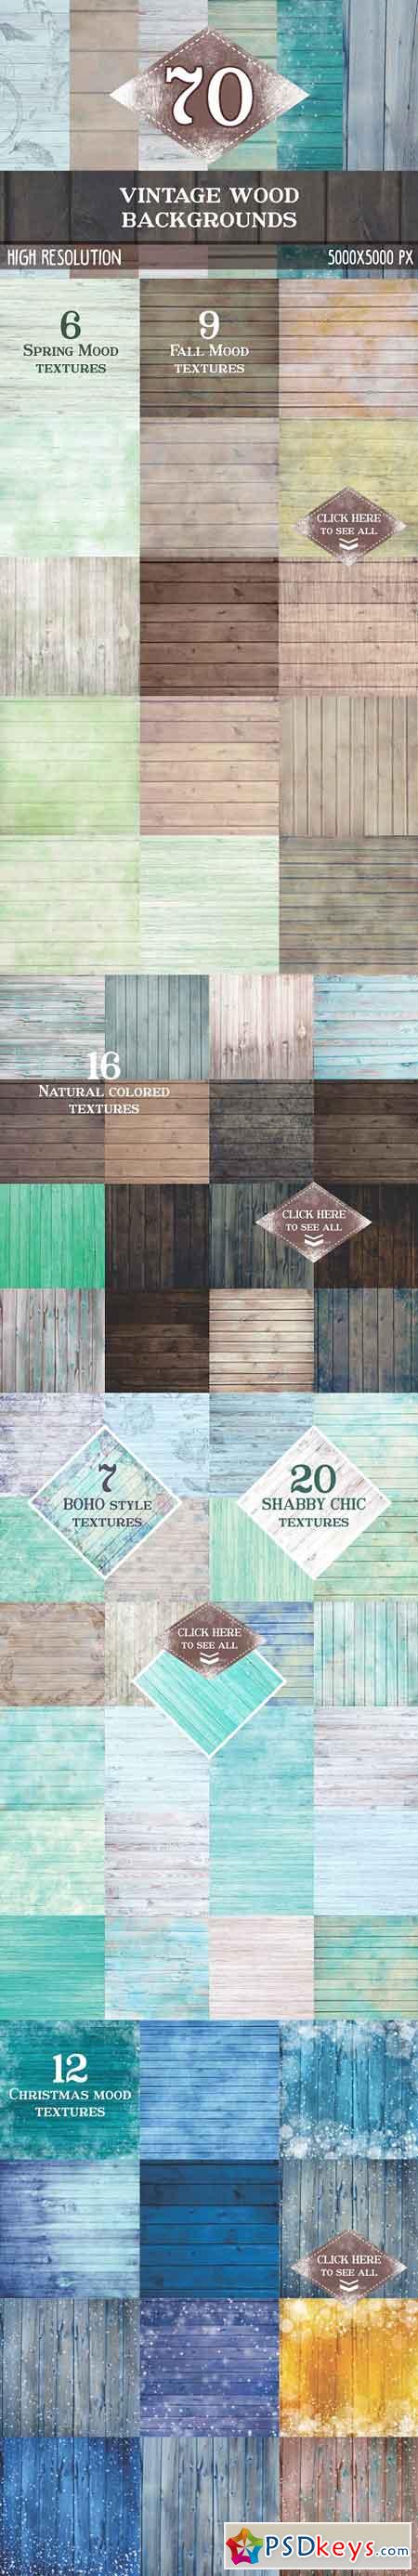 70 Vintage Wood Textures 694341